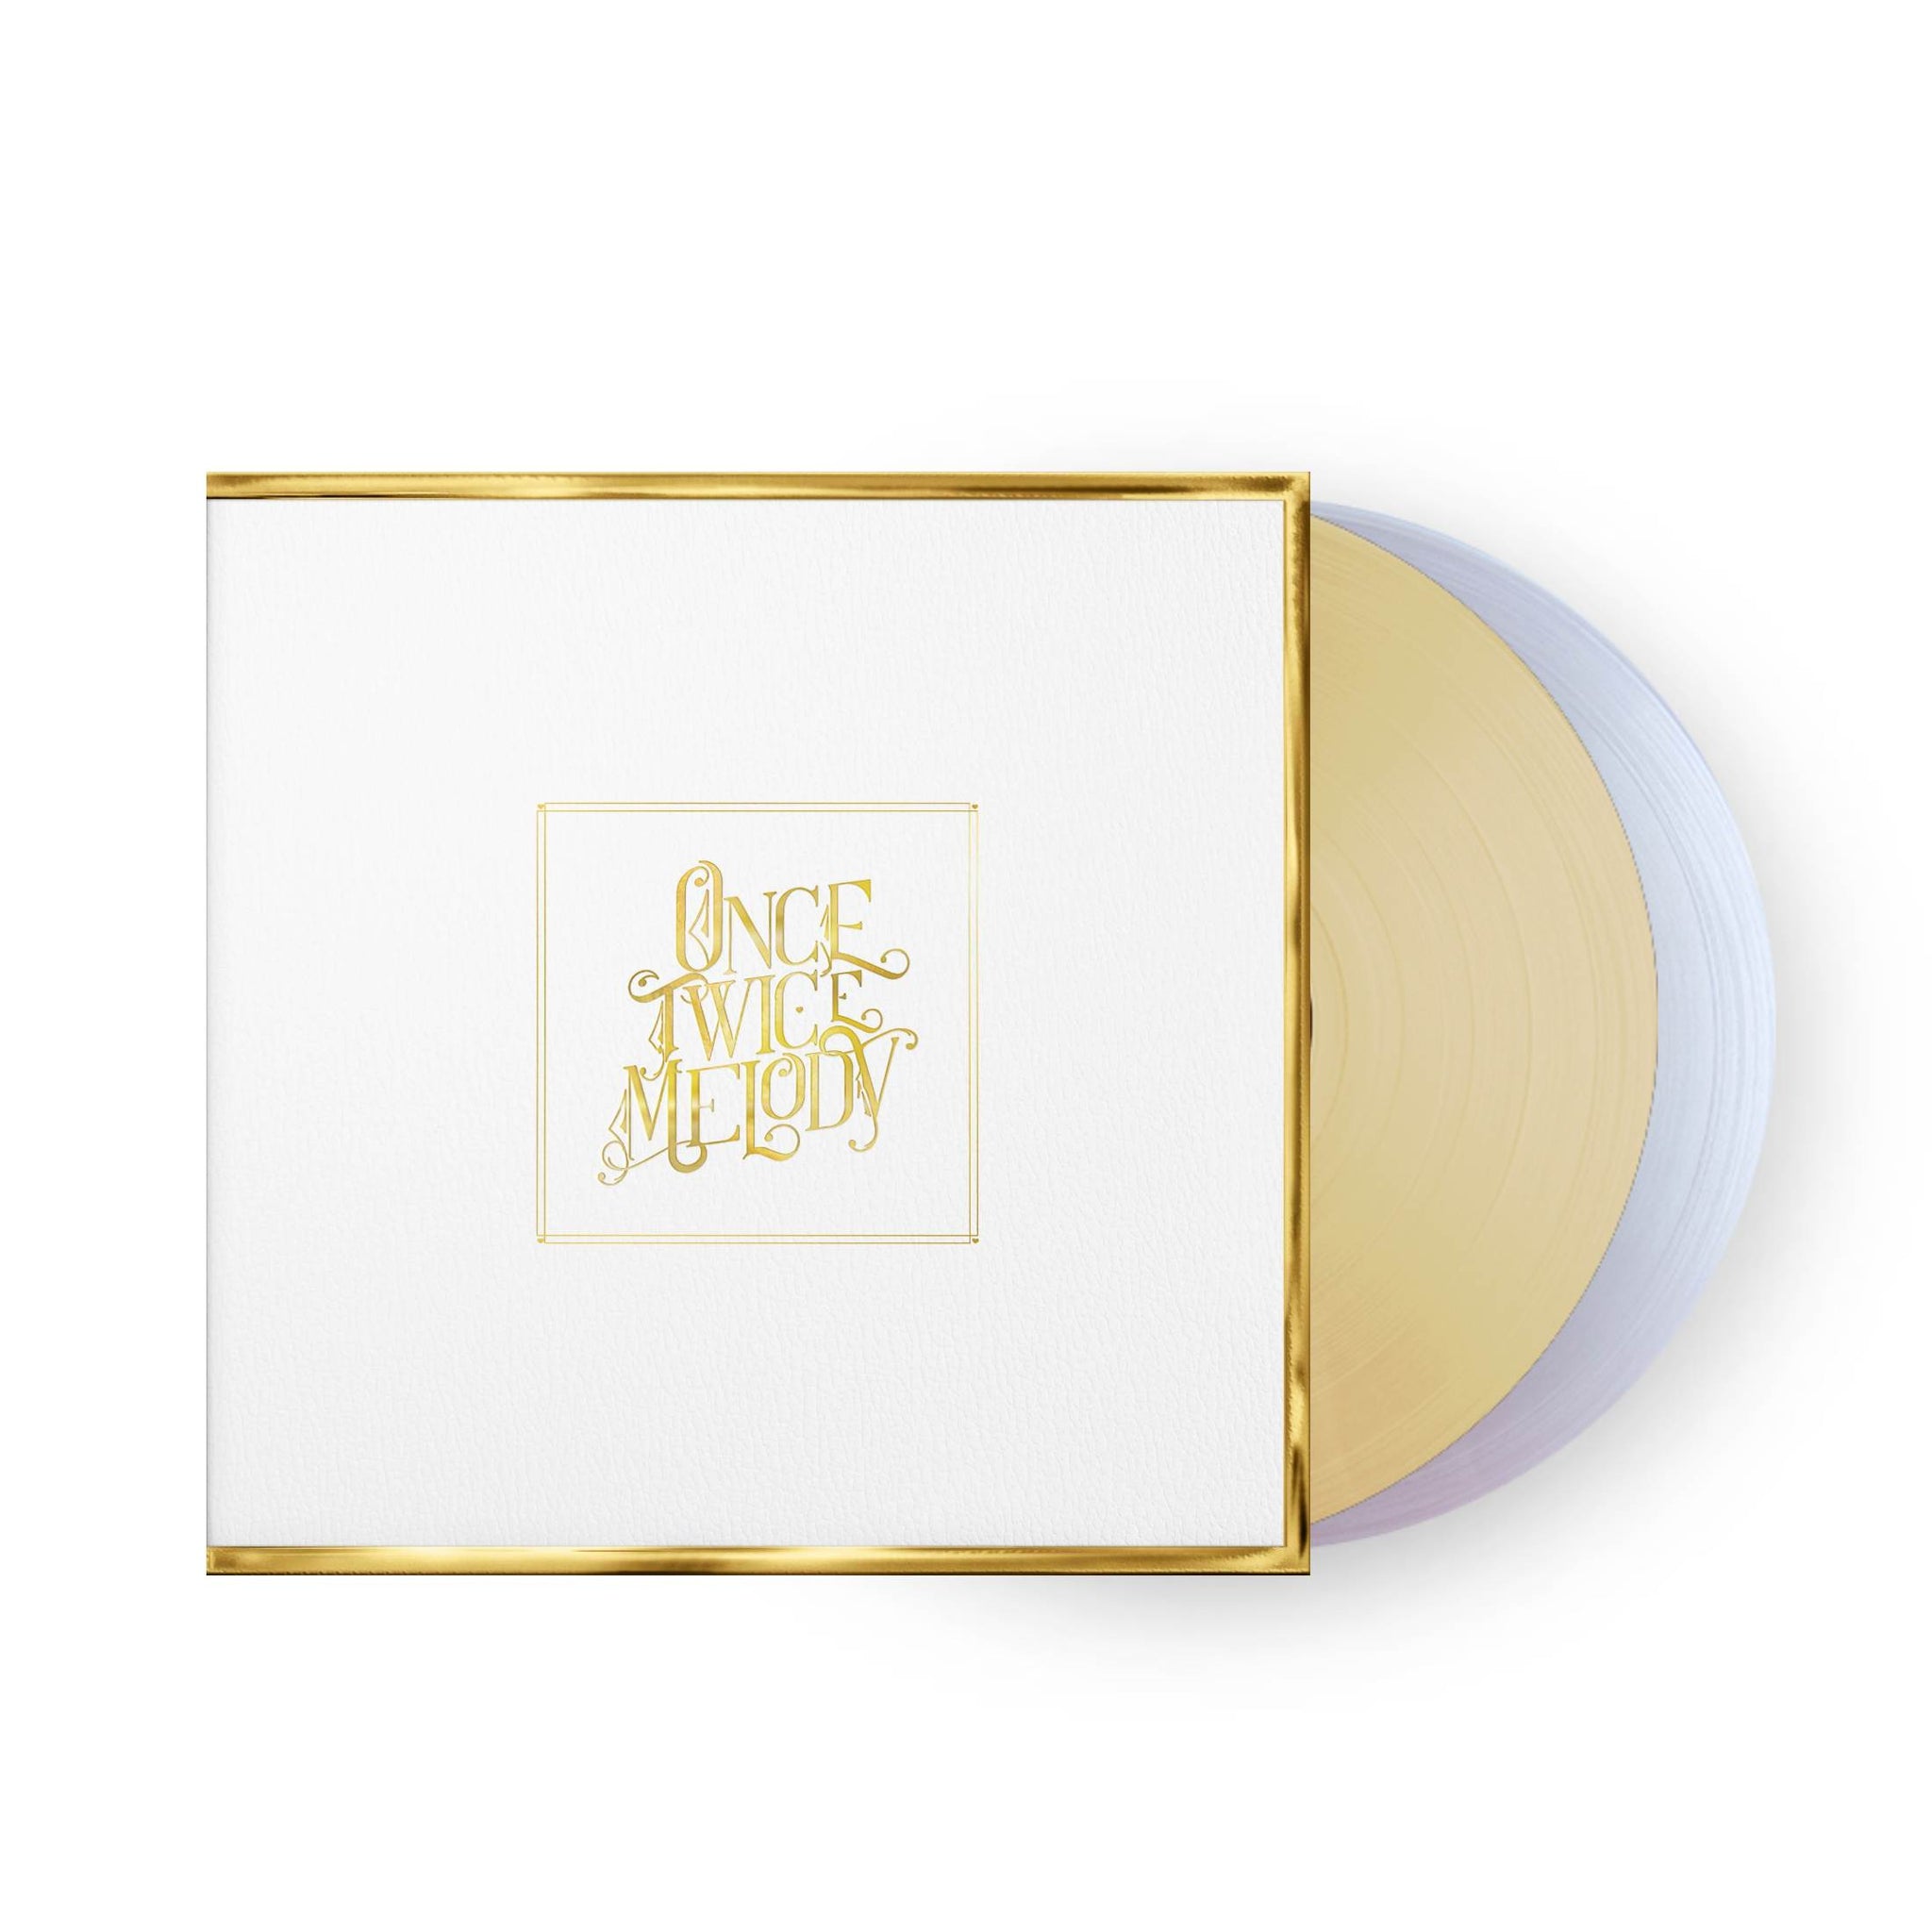 Beach House - Once Twice Melody 2xLP Boxset  (Clear Gold Vinyl)